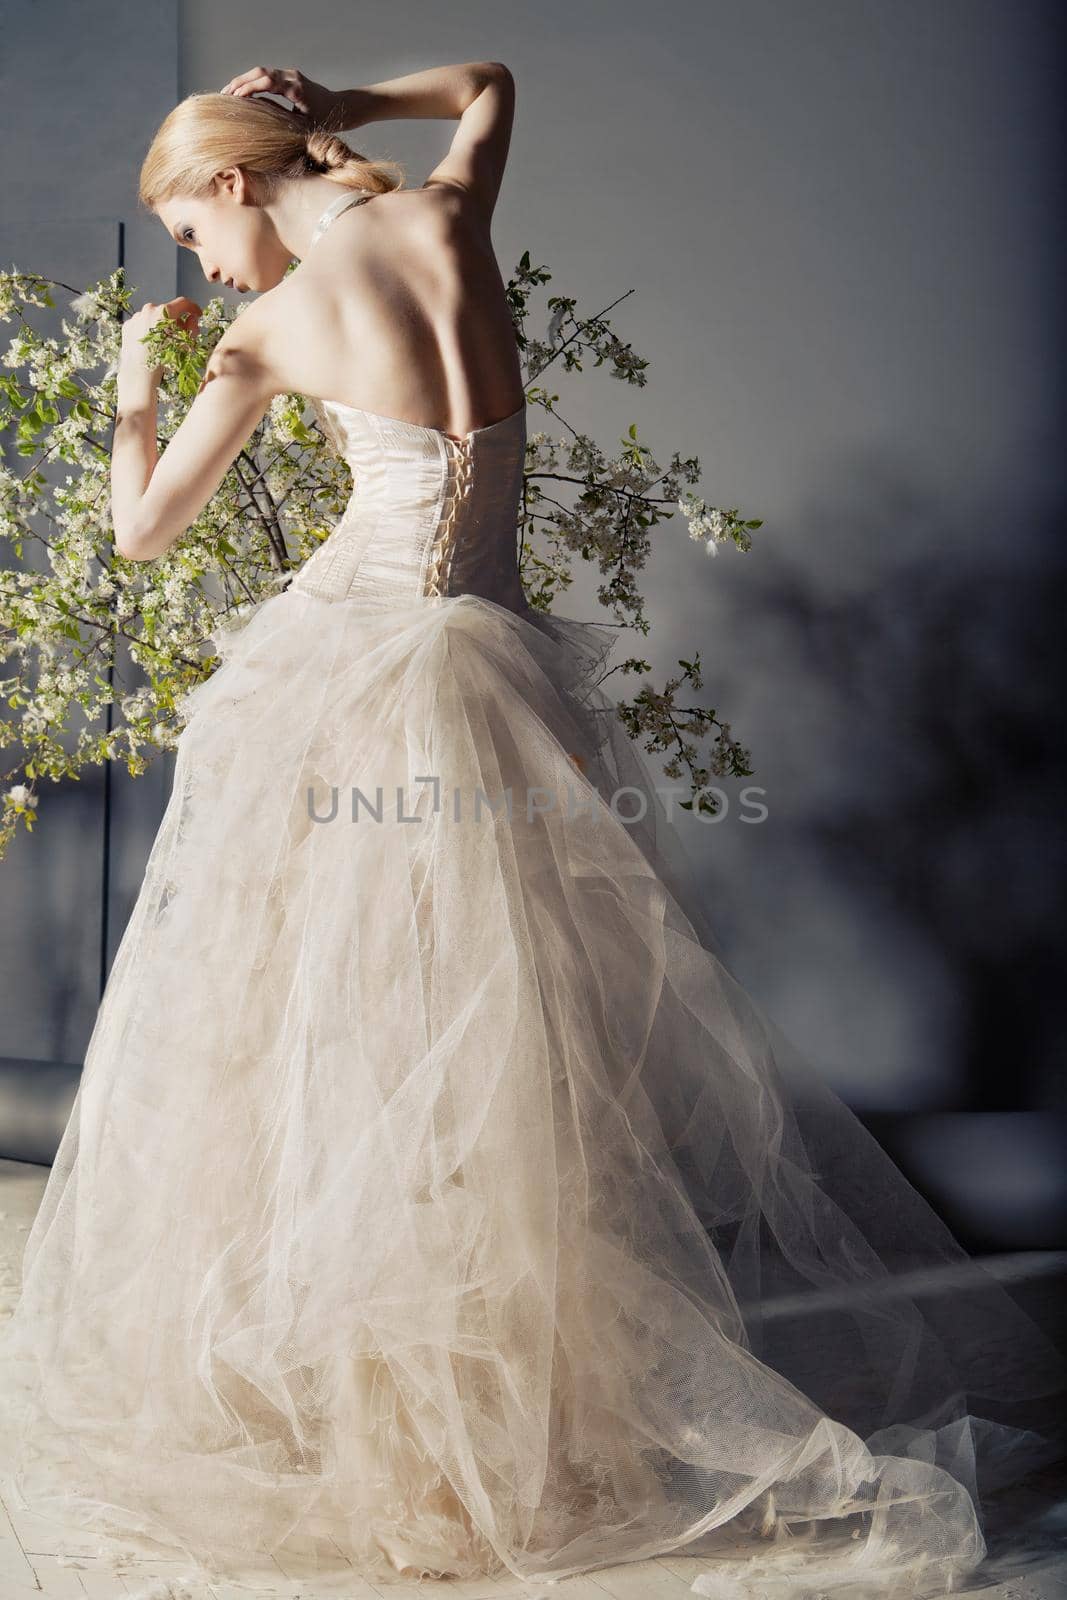 Bride in wedding dress behind bush with flowers by Julenochek